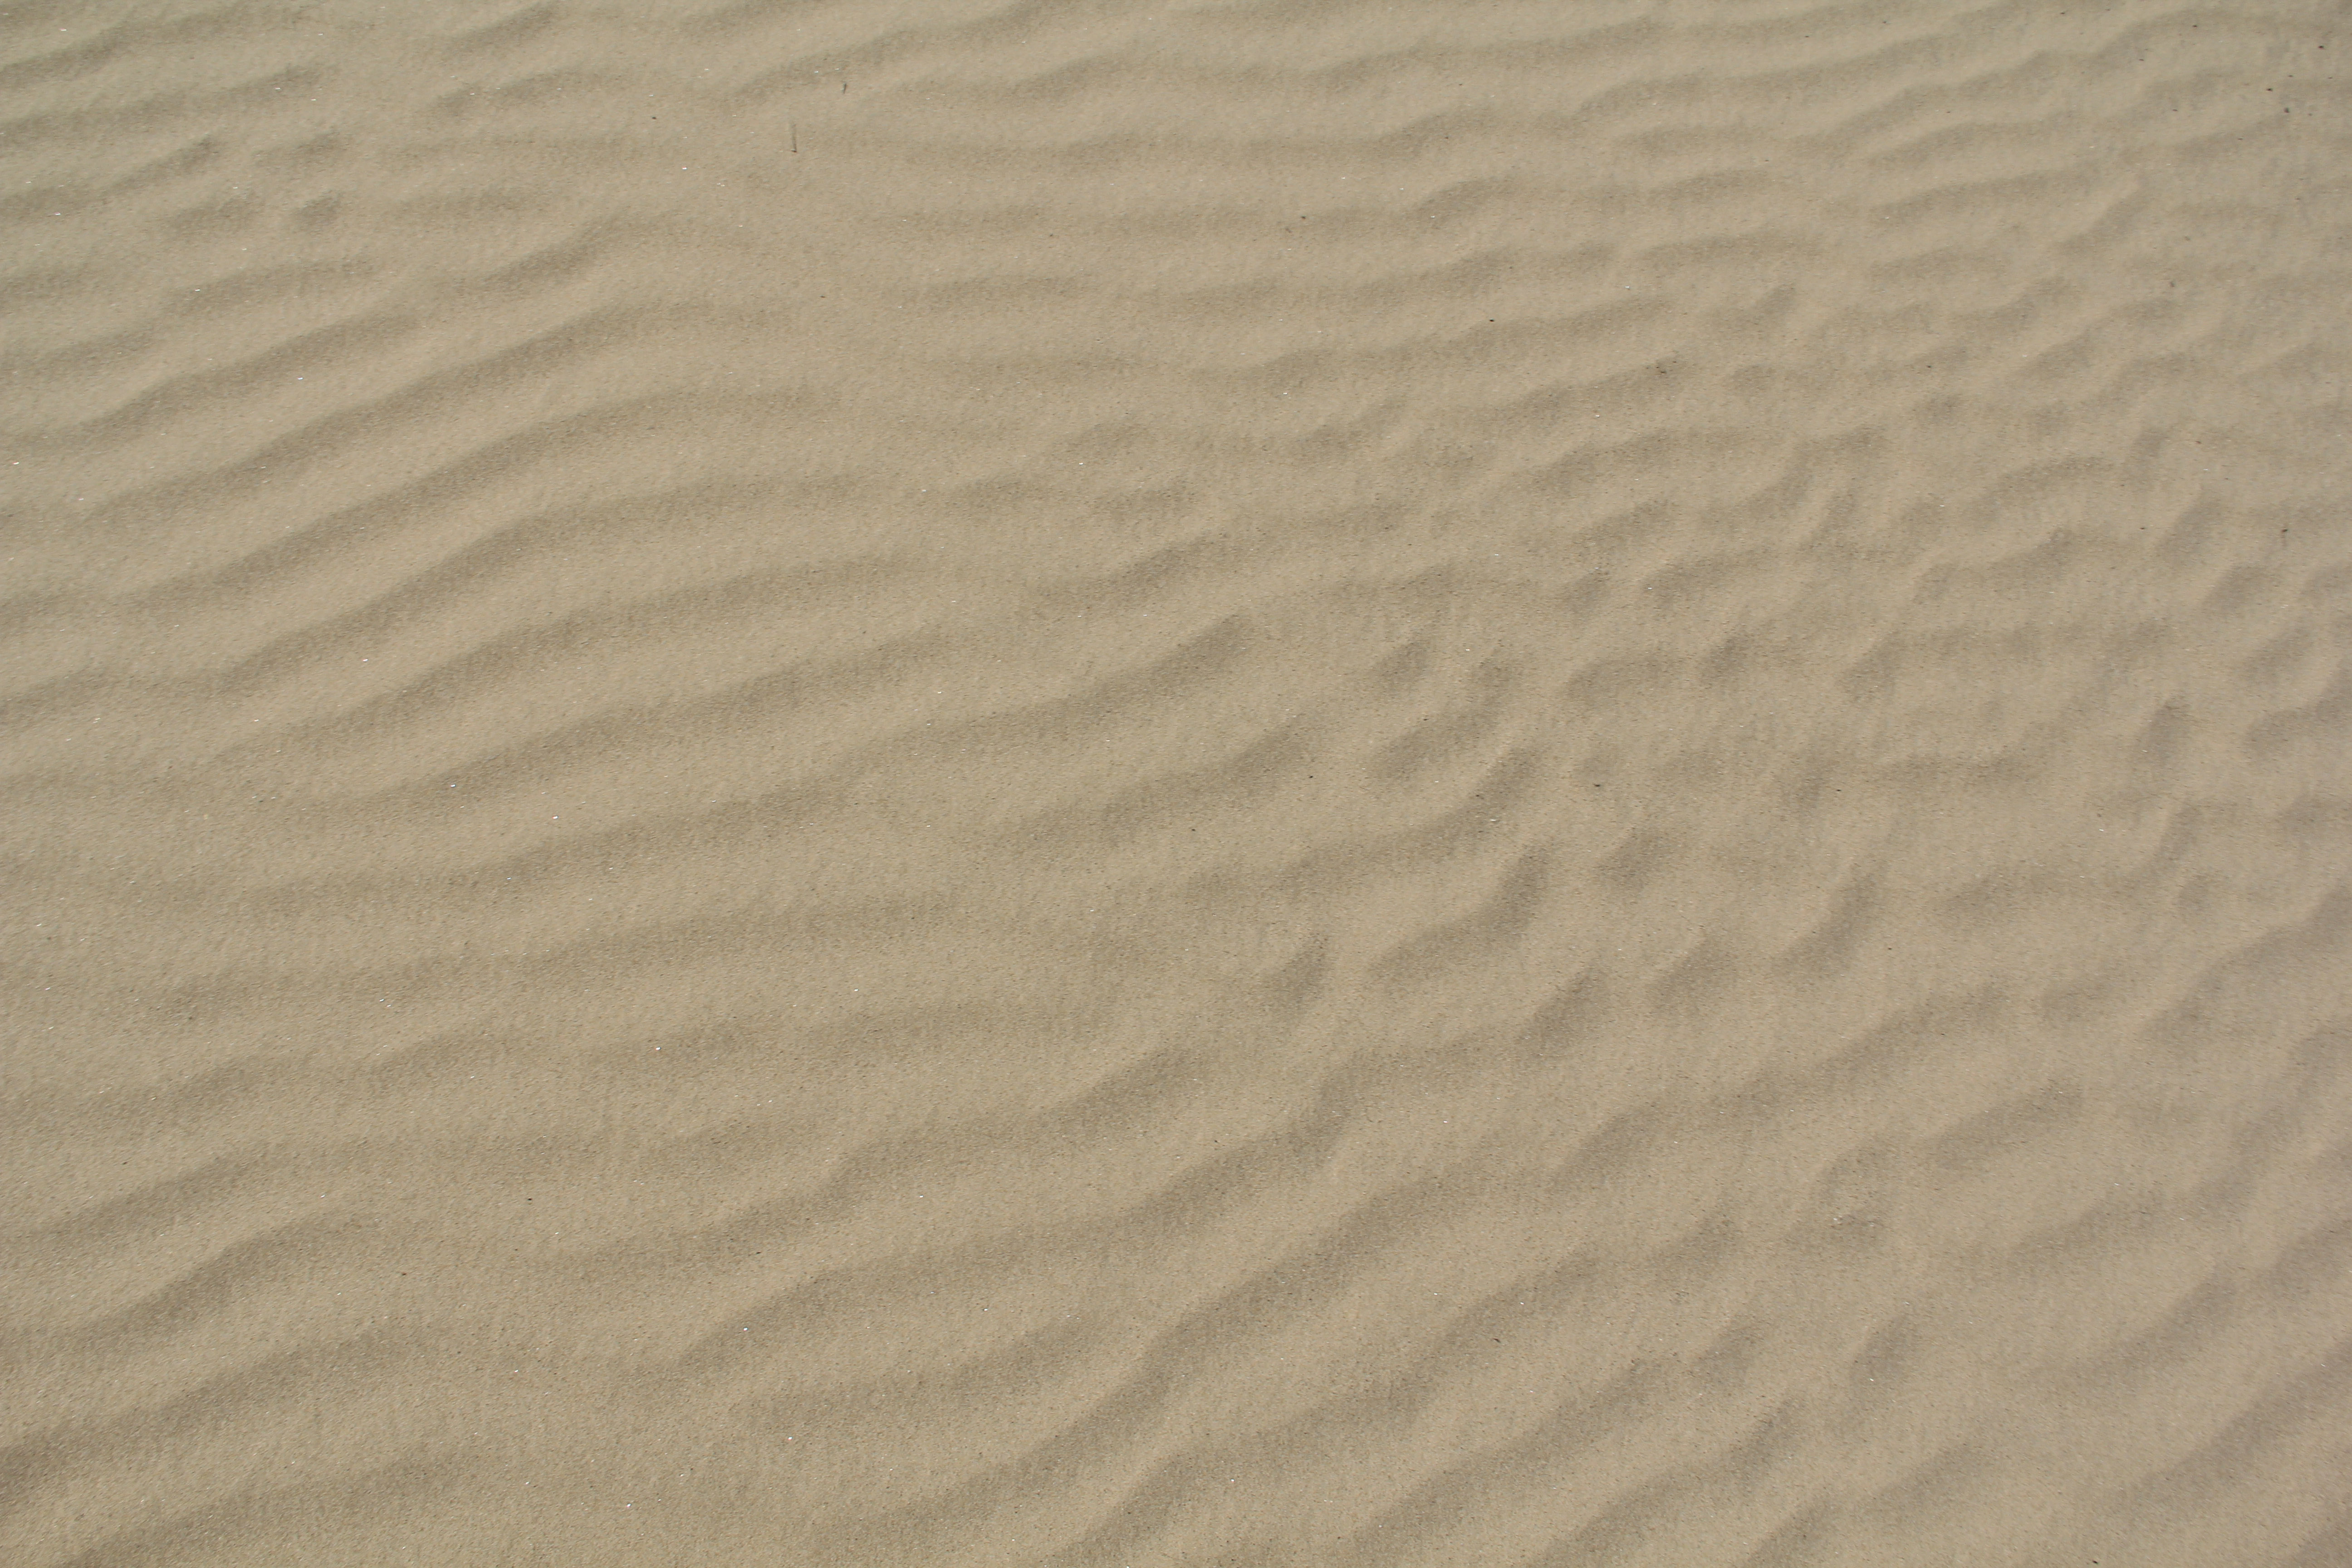 Rippled sand texture ground surface beach stock photo - TextureX ...